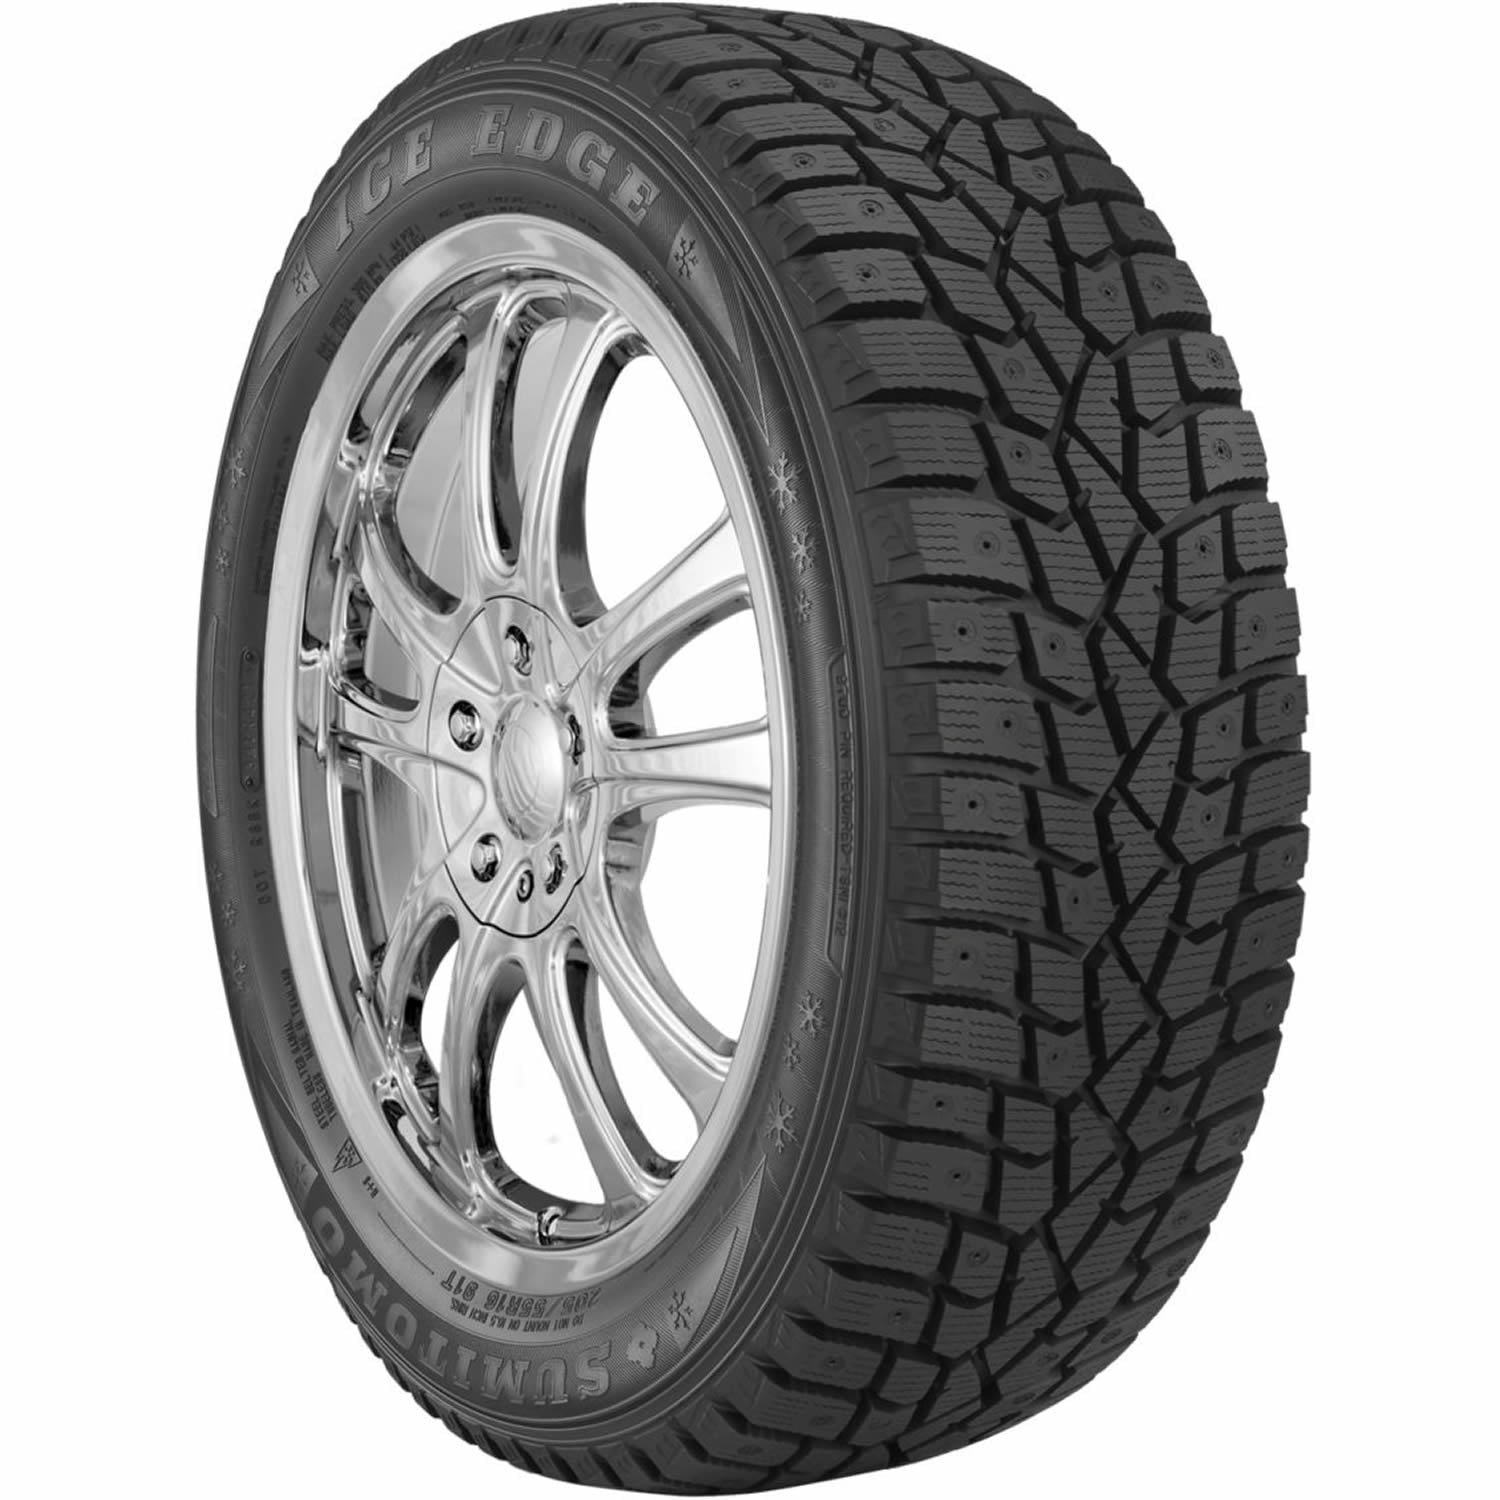 SUMITOMO ICE EDGE 215/60R17 (27.5X8.5R 17) Tires